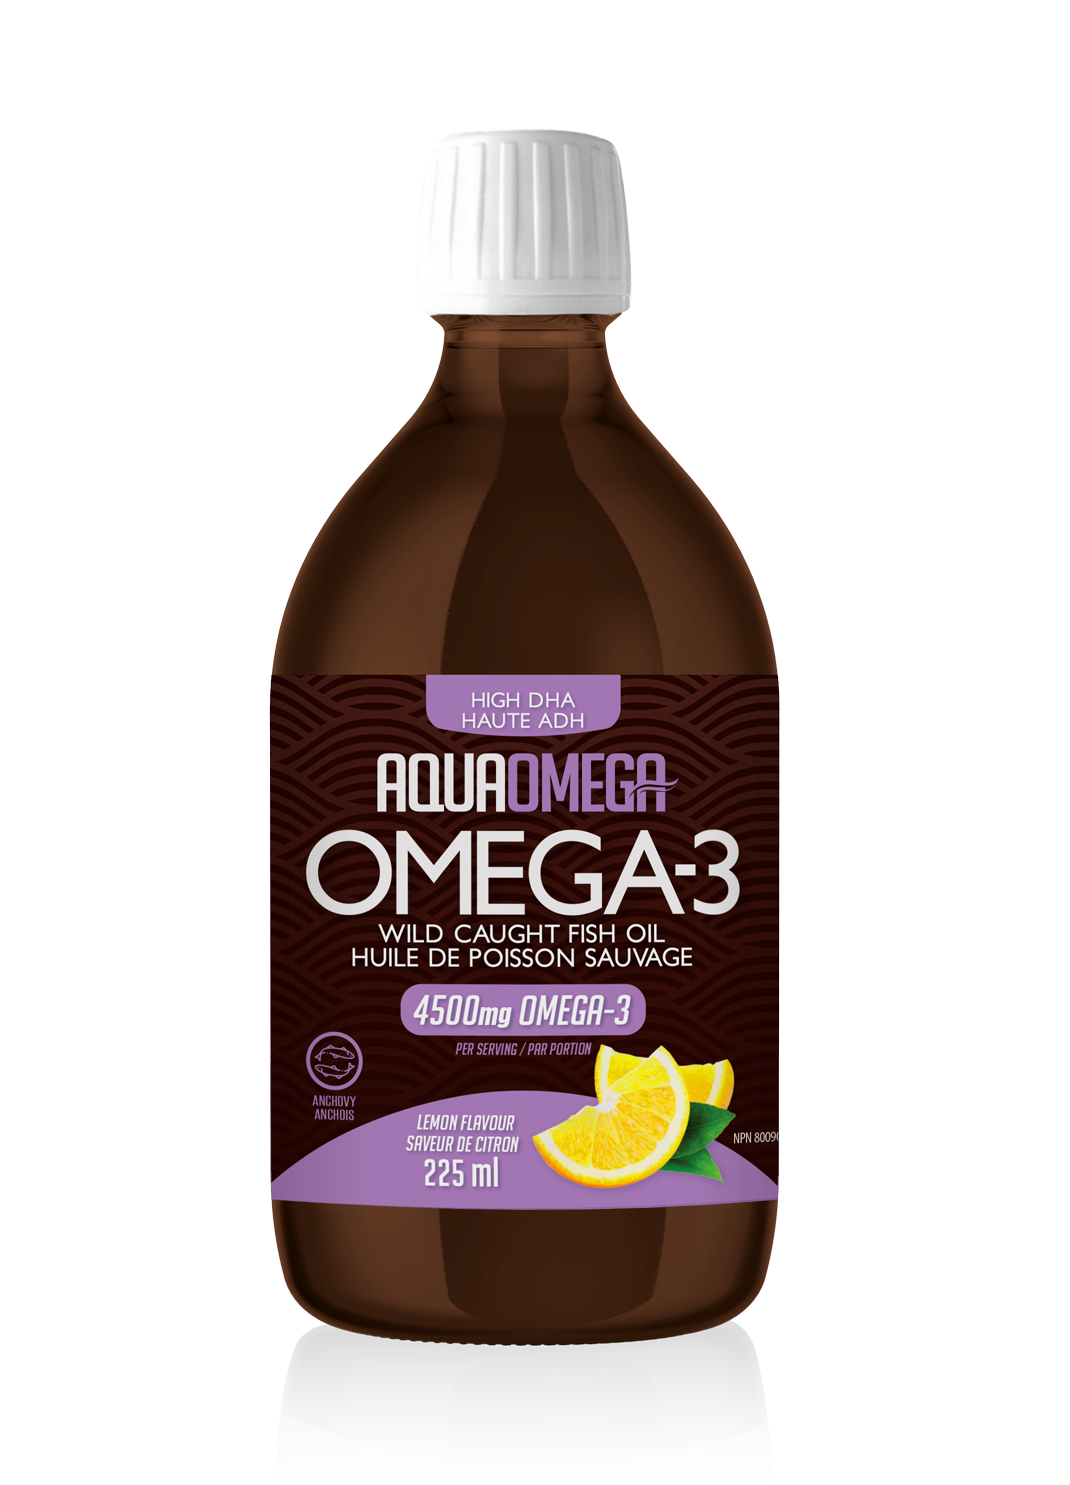 AquaOmega 1:5 High DHA OMEGA-3 with Caught Fish Oil, Lemon flavor (225ml)